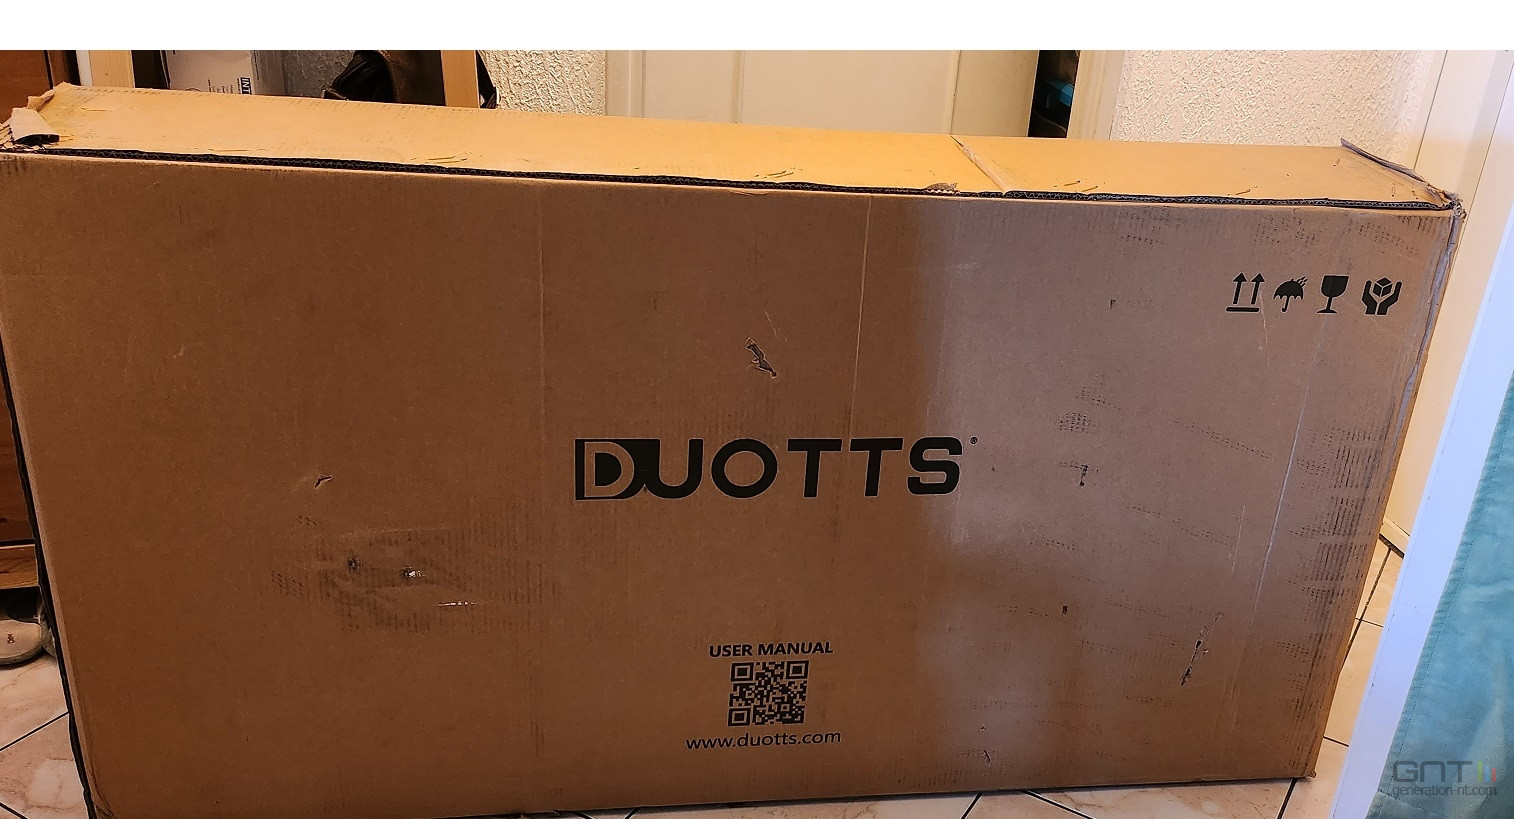 Duotts S26 carton